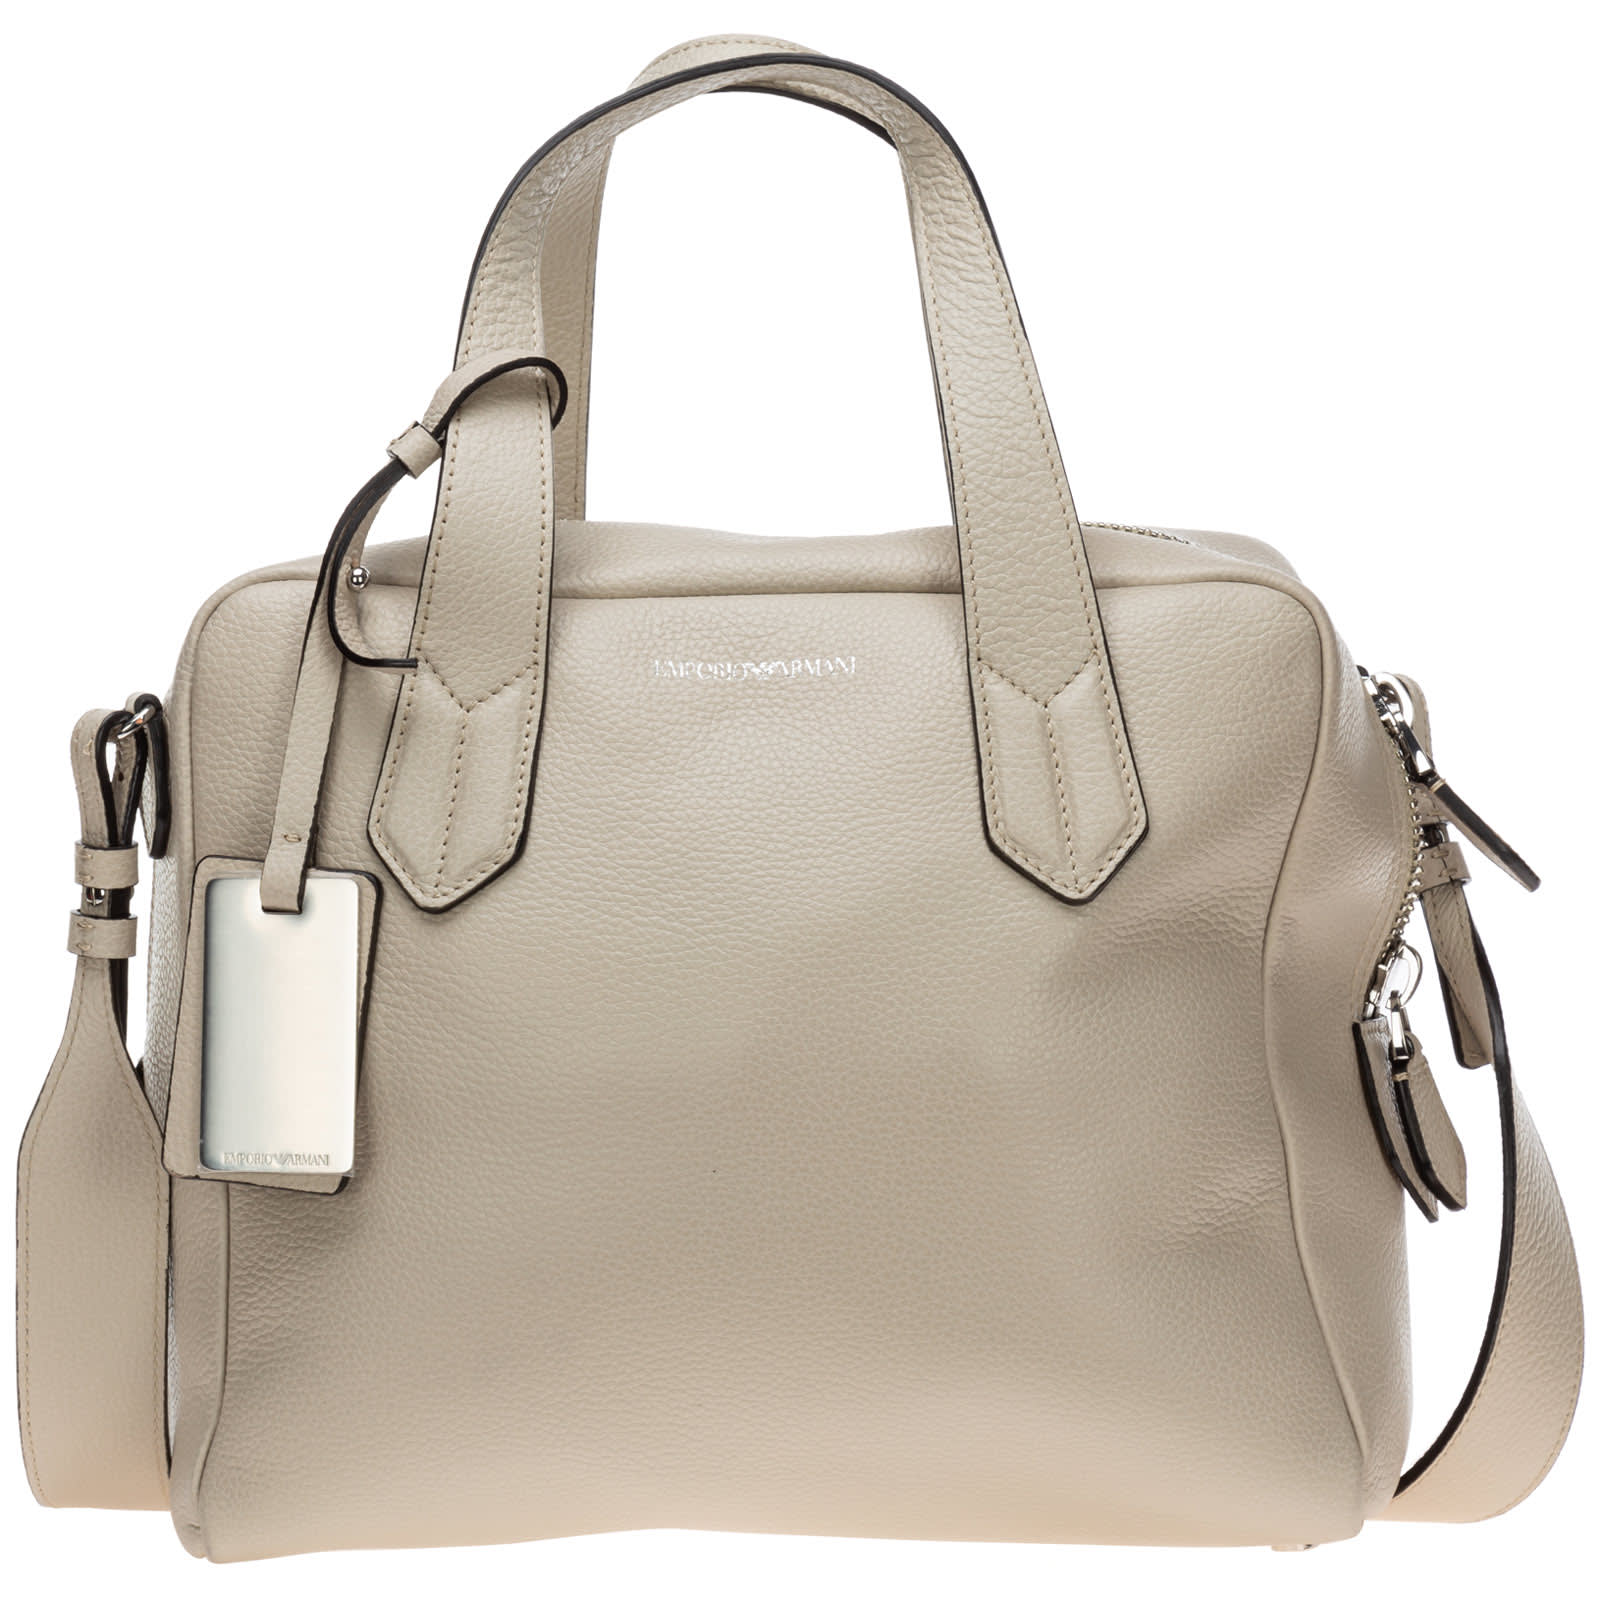 Emporio Armani Women's Leather Handbag Shopping Bag Purse In Beige ...